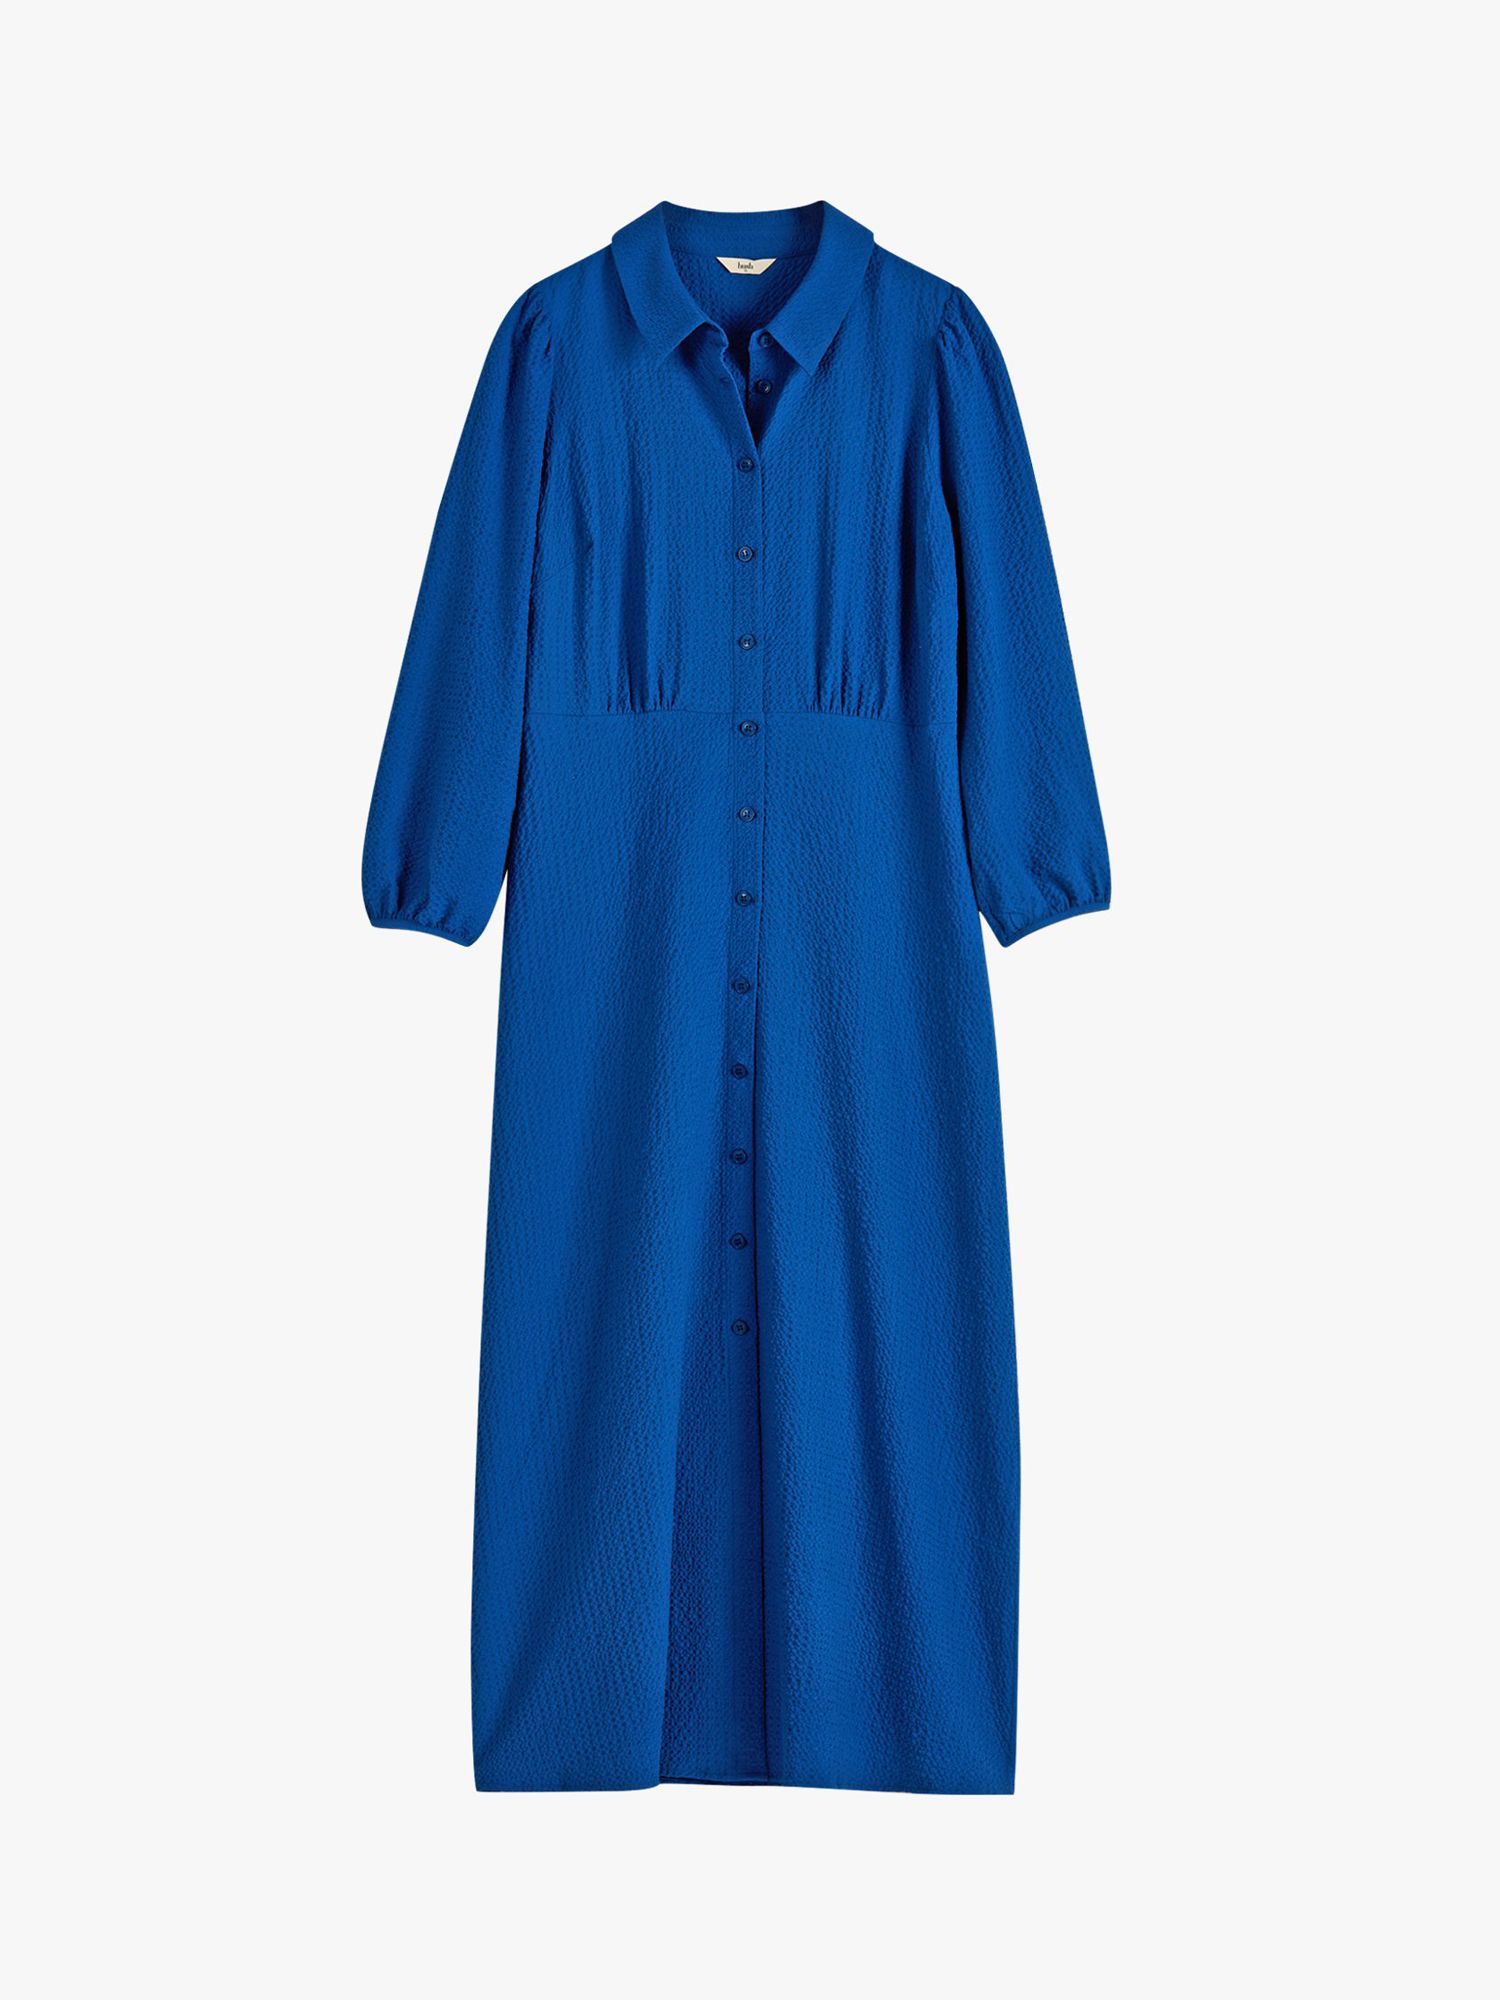 hush Millie Shirt Dress, Dark Blue at John Lewis & Partners